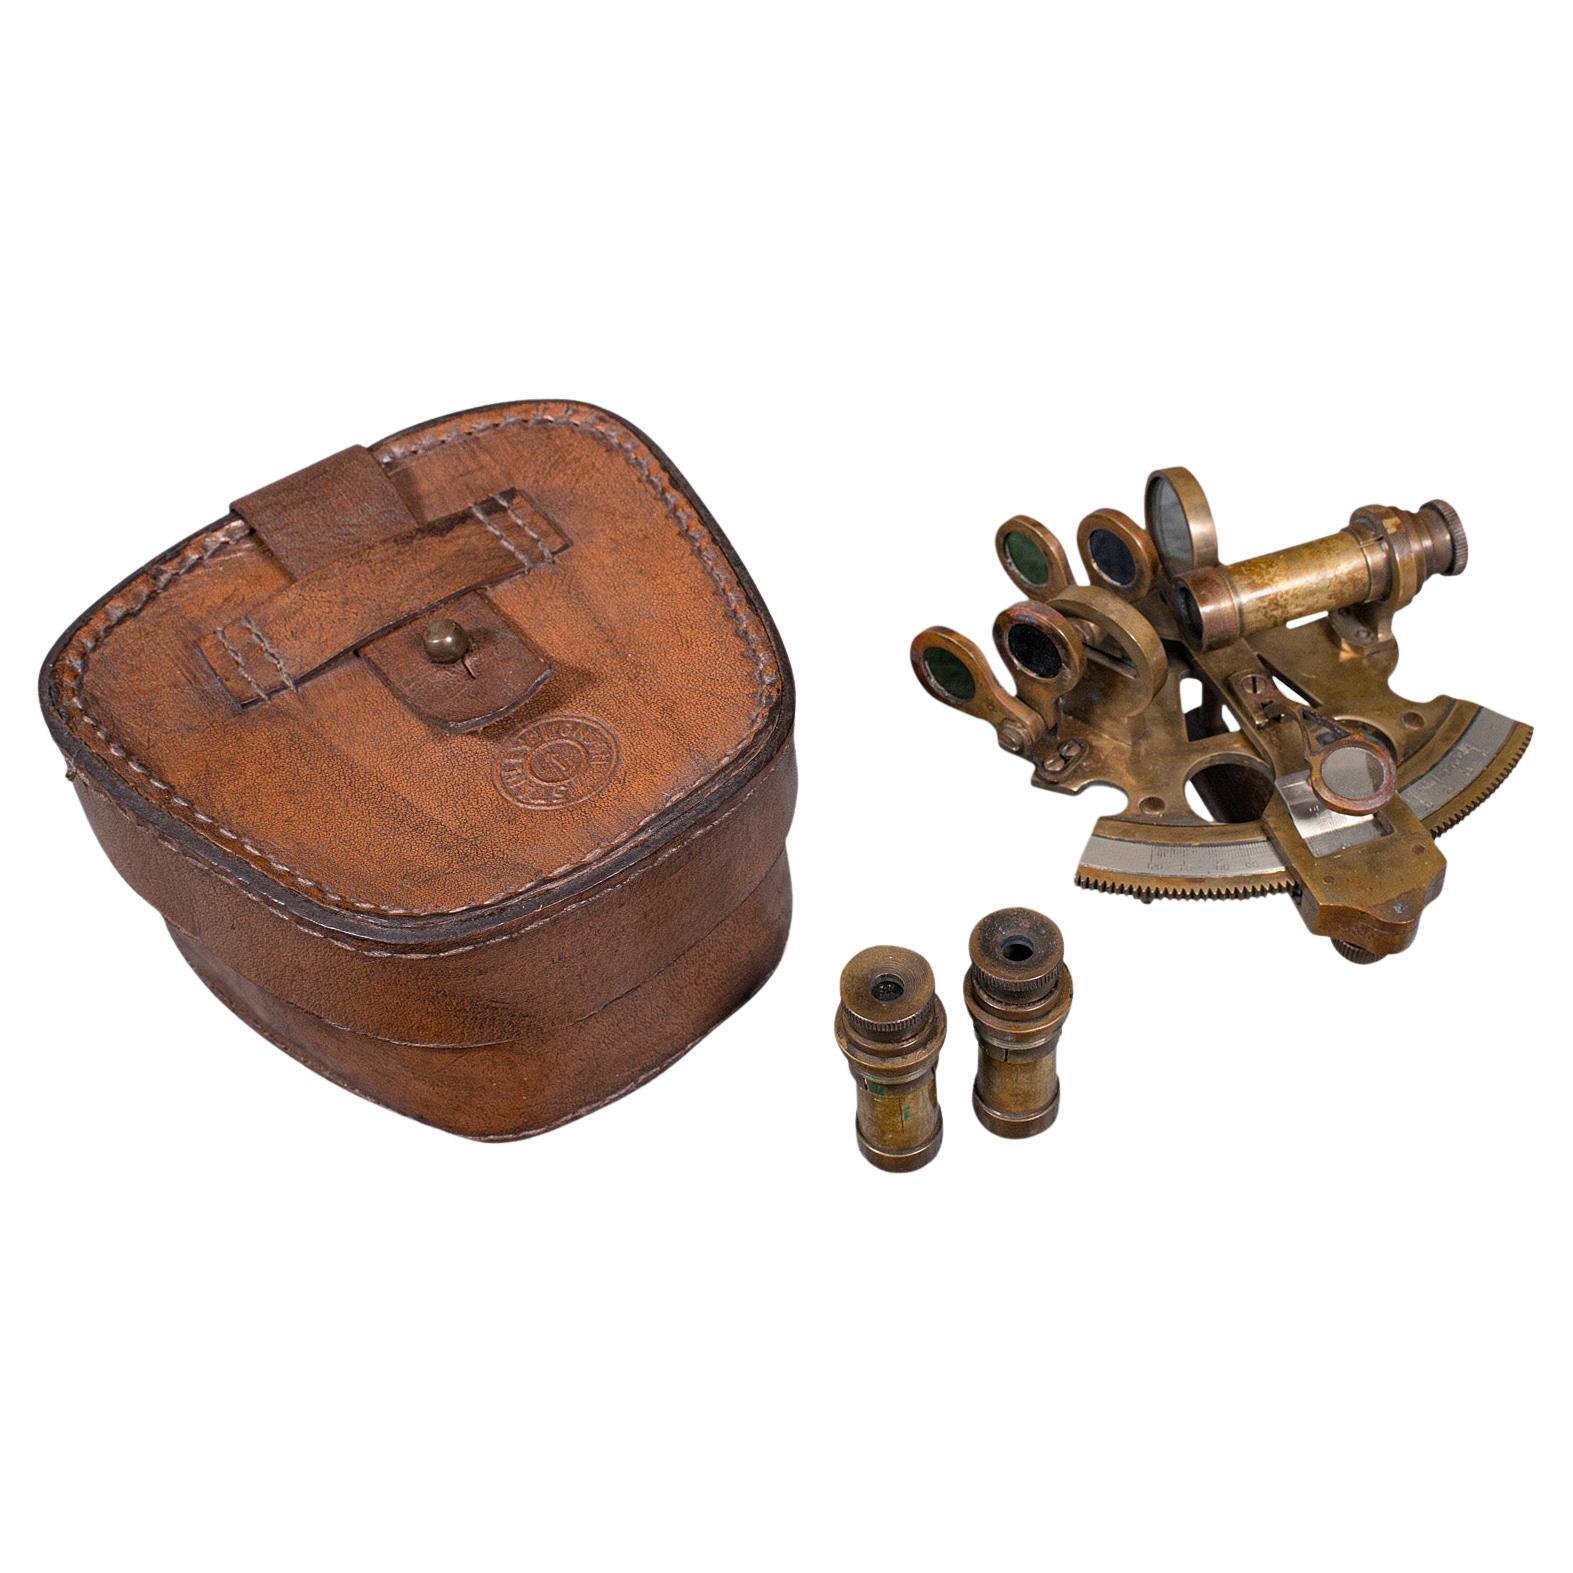 Antique Field Sextant, English, Brass, Military Instrument, Stanley, Victorian